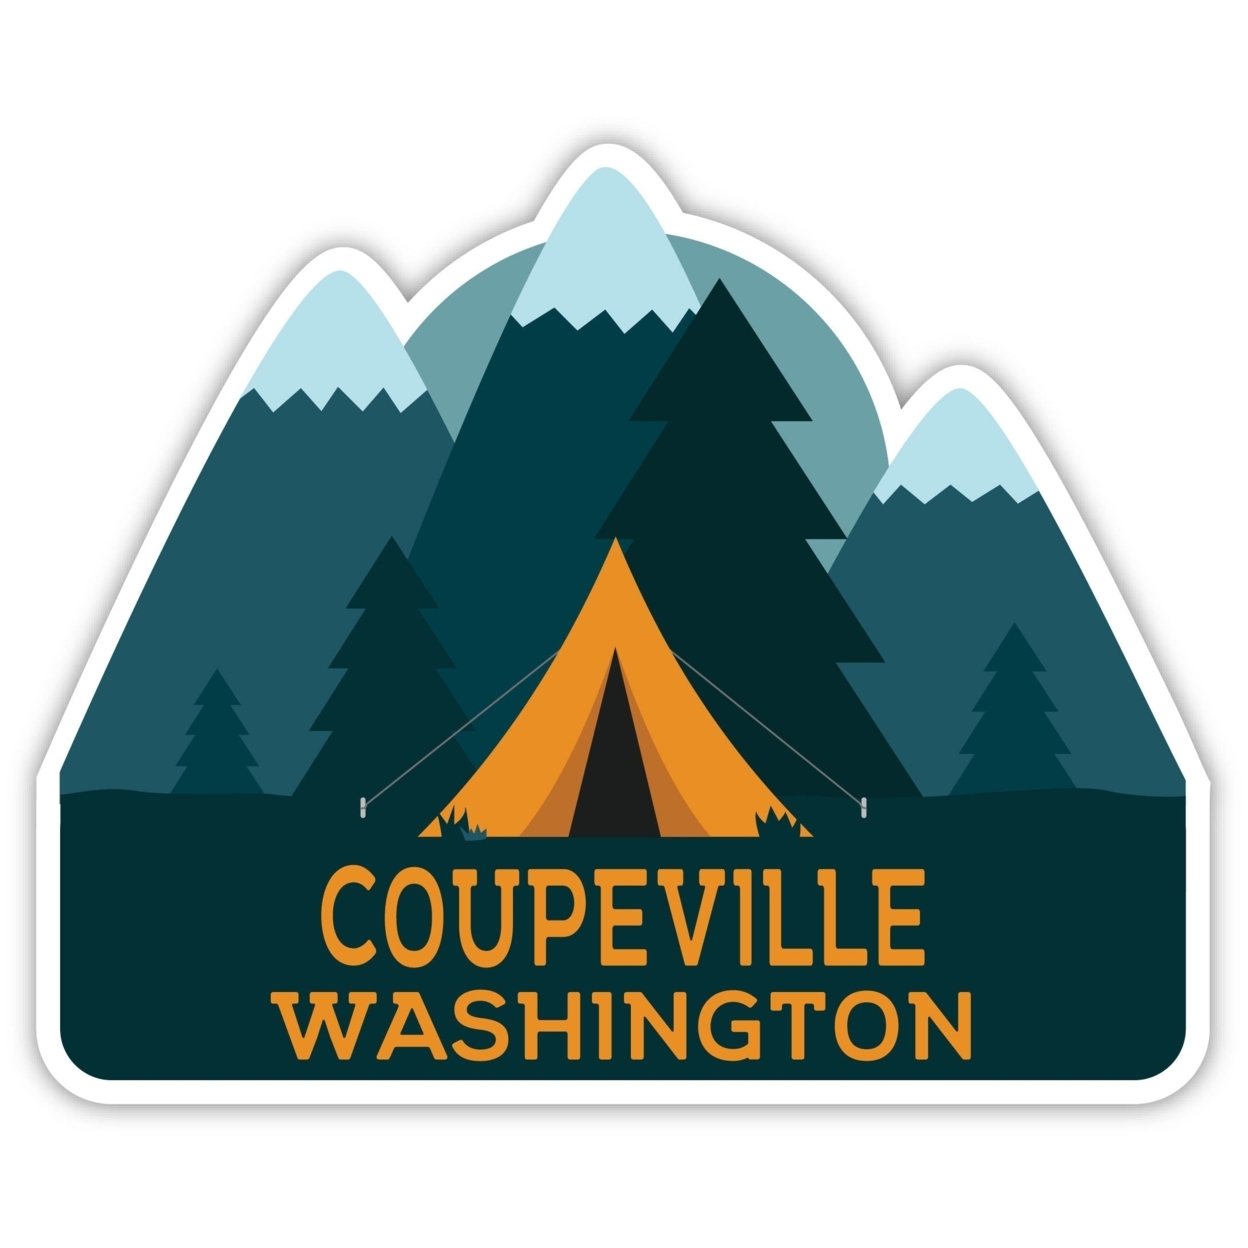 Coupeville Washington Souvenir Decorative Stickers (Choose Theme And Size) - 4-Pack, 4-Inch, Tent